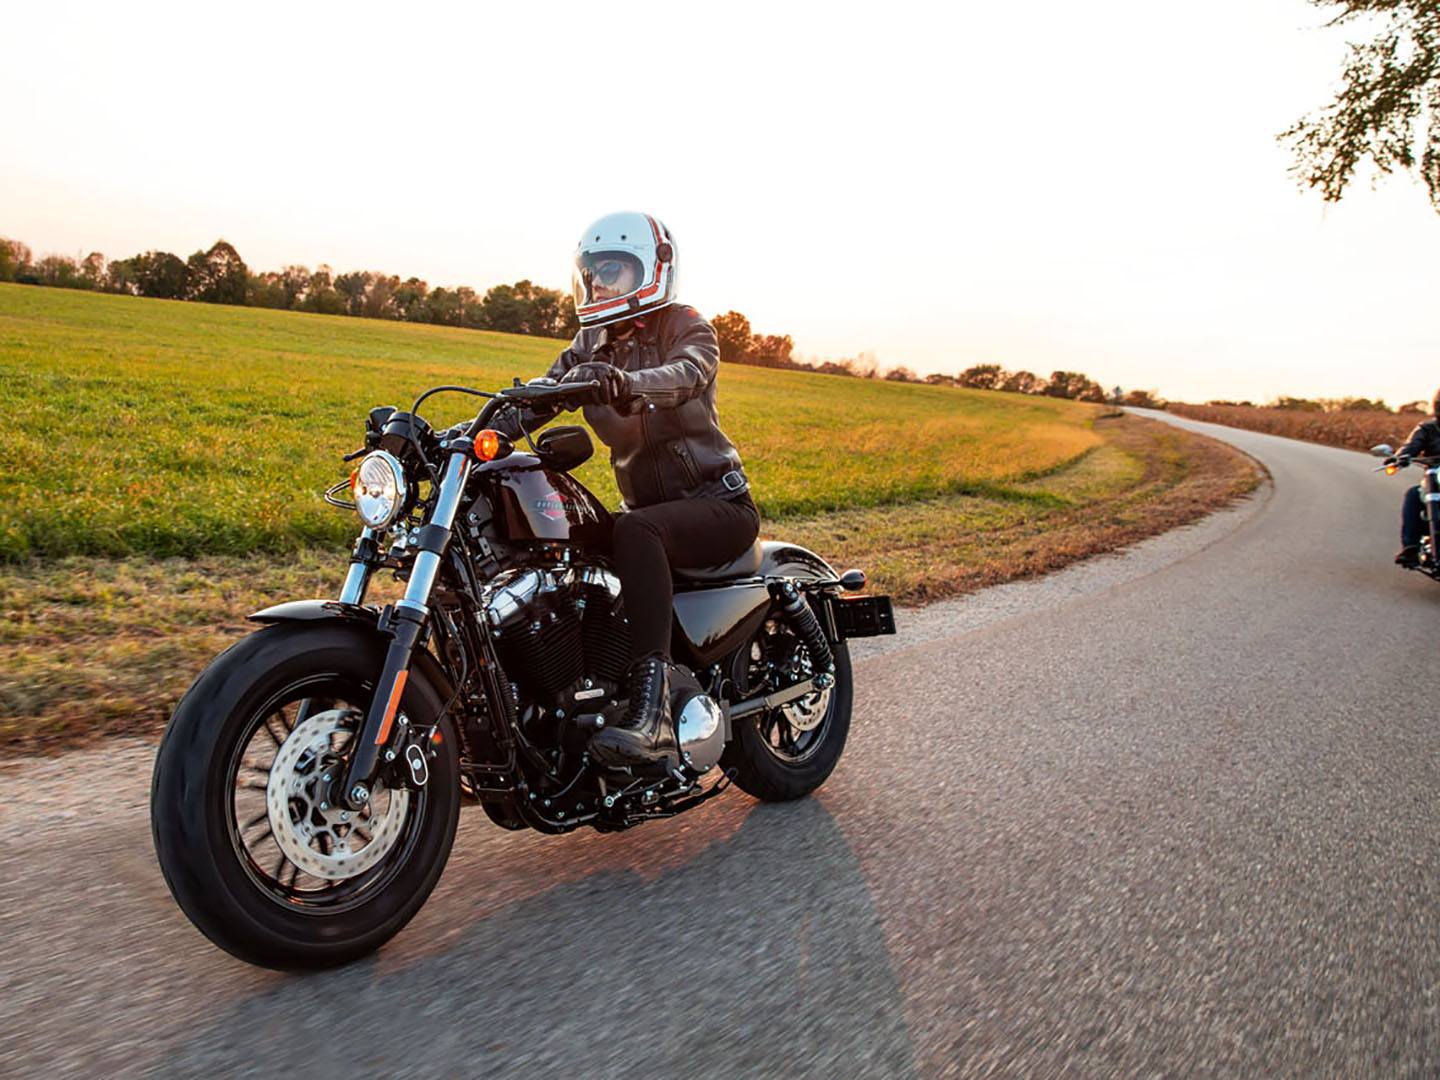 2021 Harley-Davidson Forty-Eight® in Albert Lea, Minnesota - Photo 16